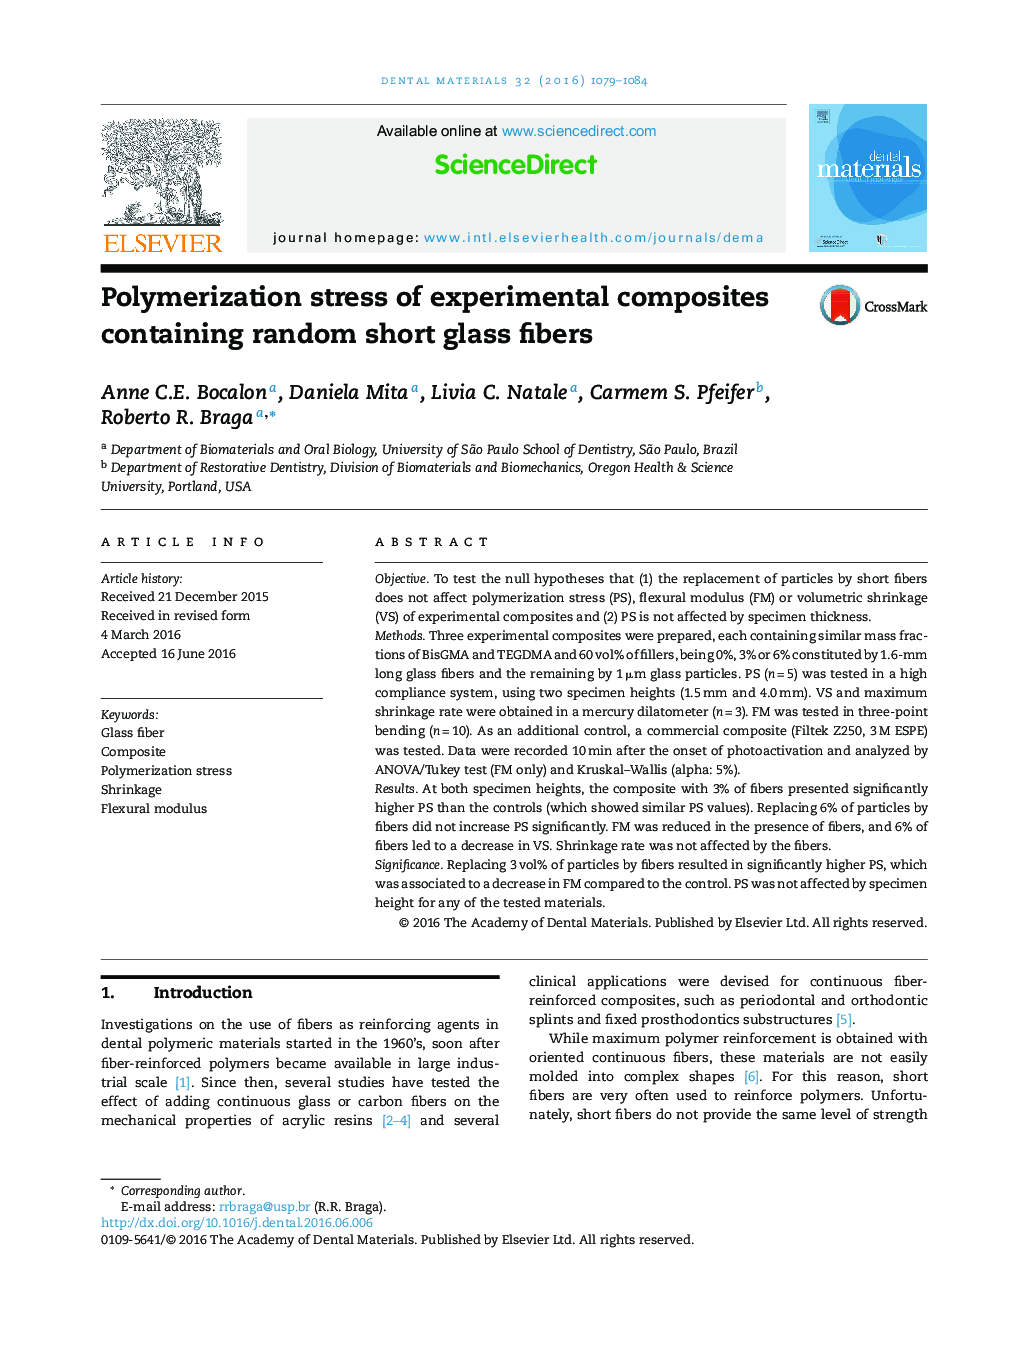 Polymerization stress of experimental composites containing random short glass fibers